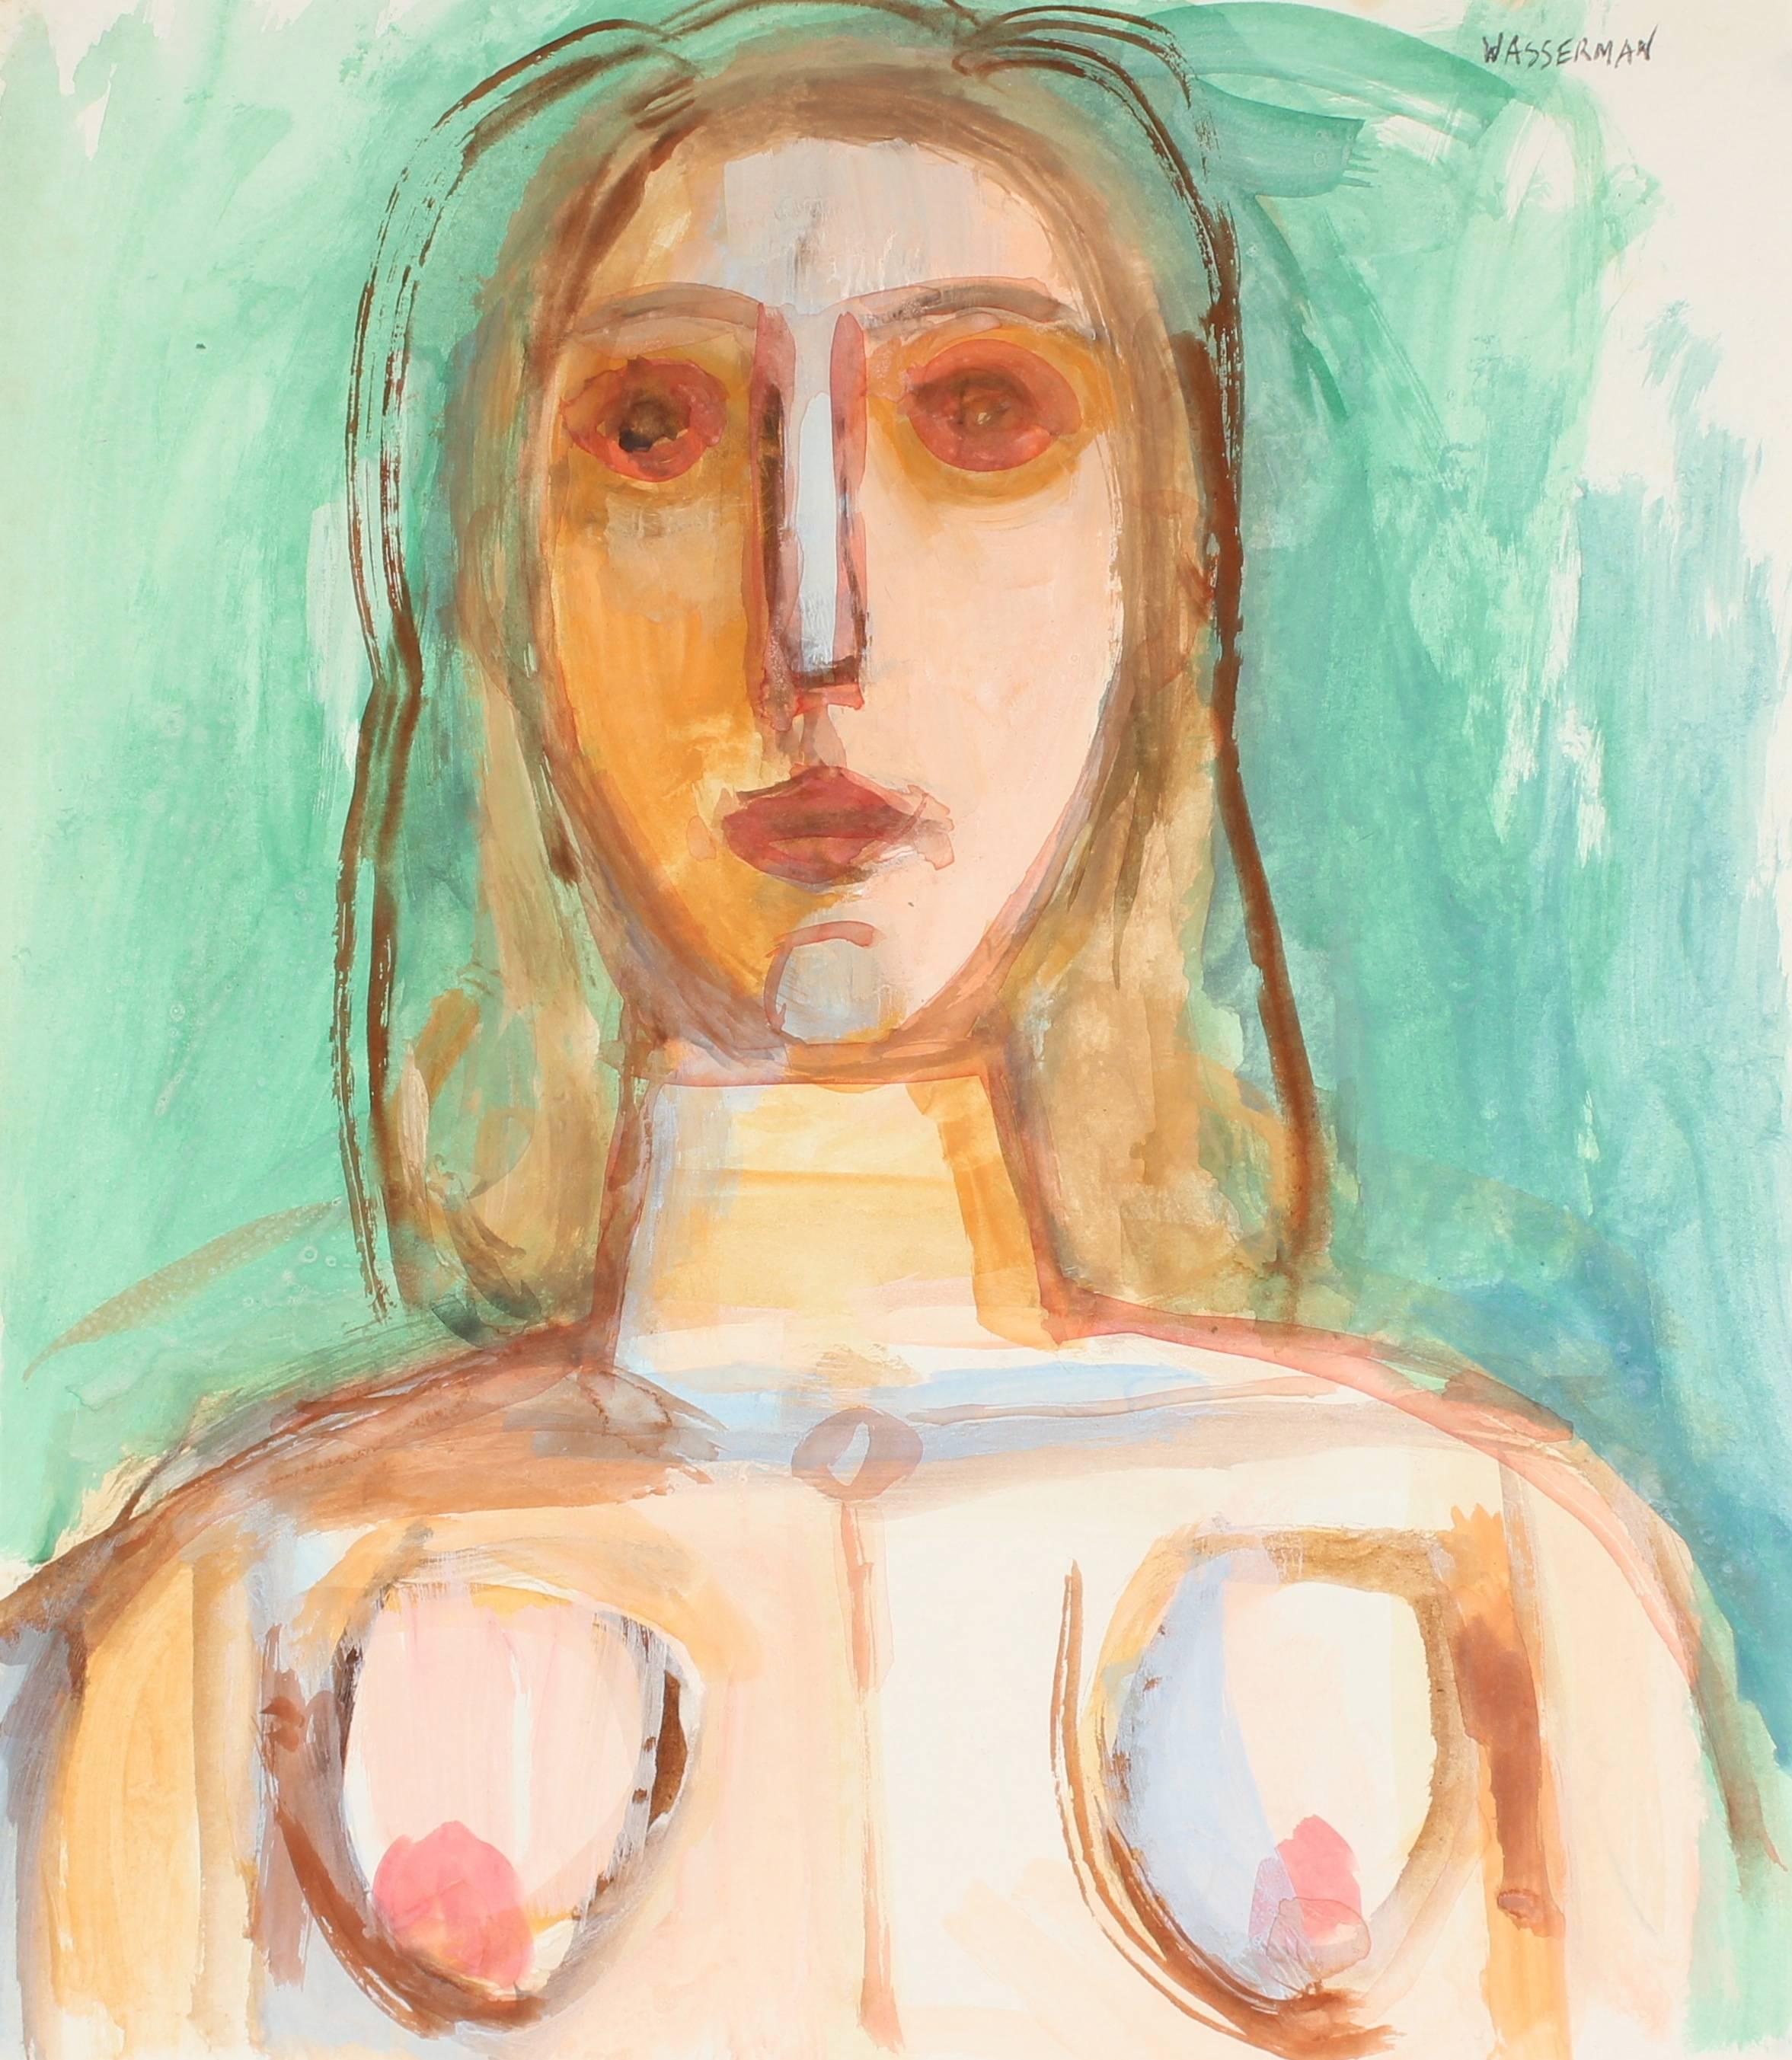 Modernist Female Portrait in Gouache, 20th Century - Art by Gerald Wasserman